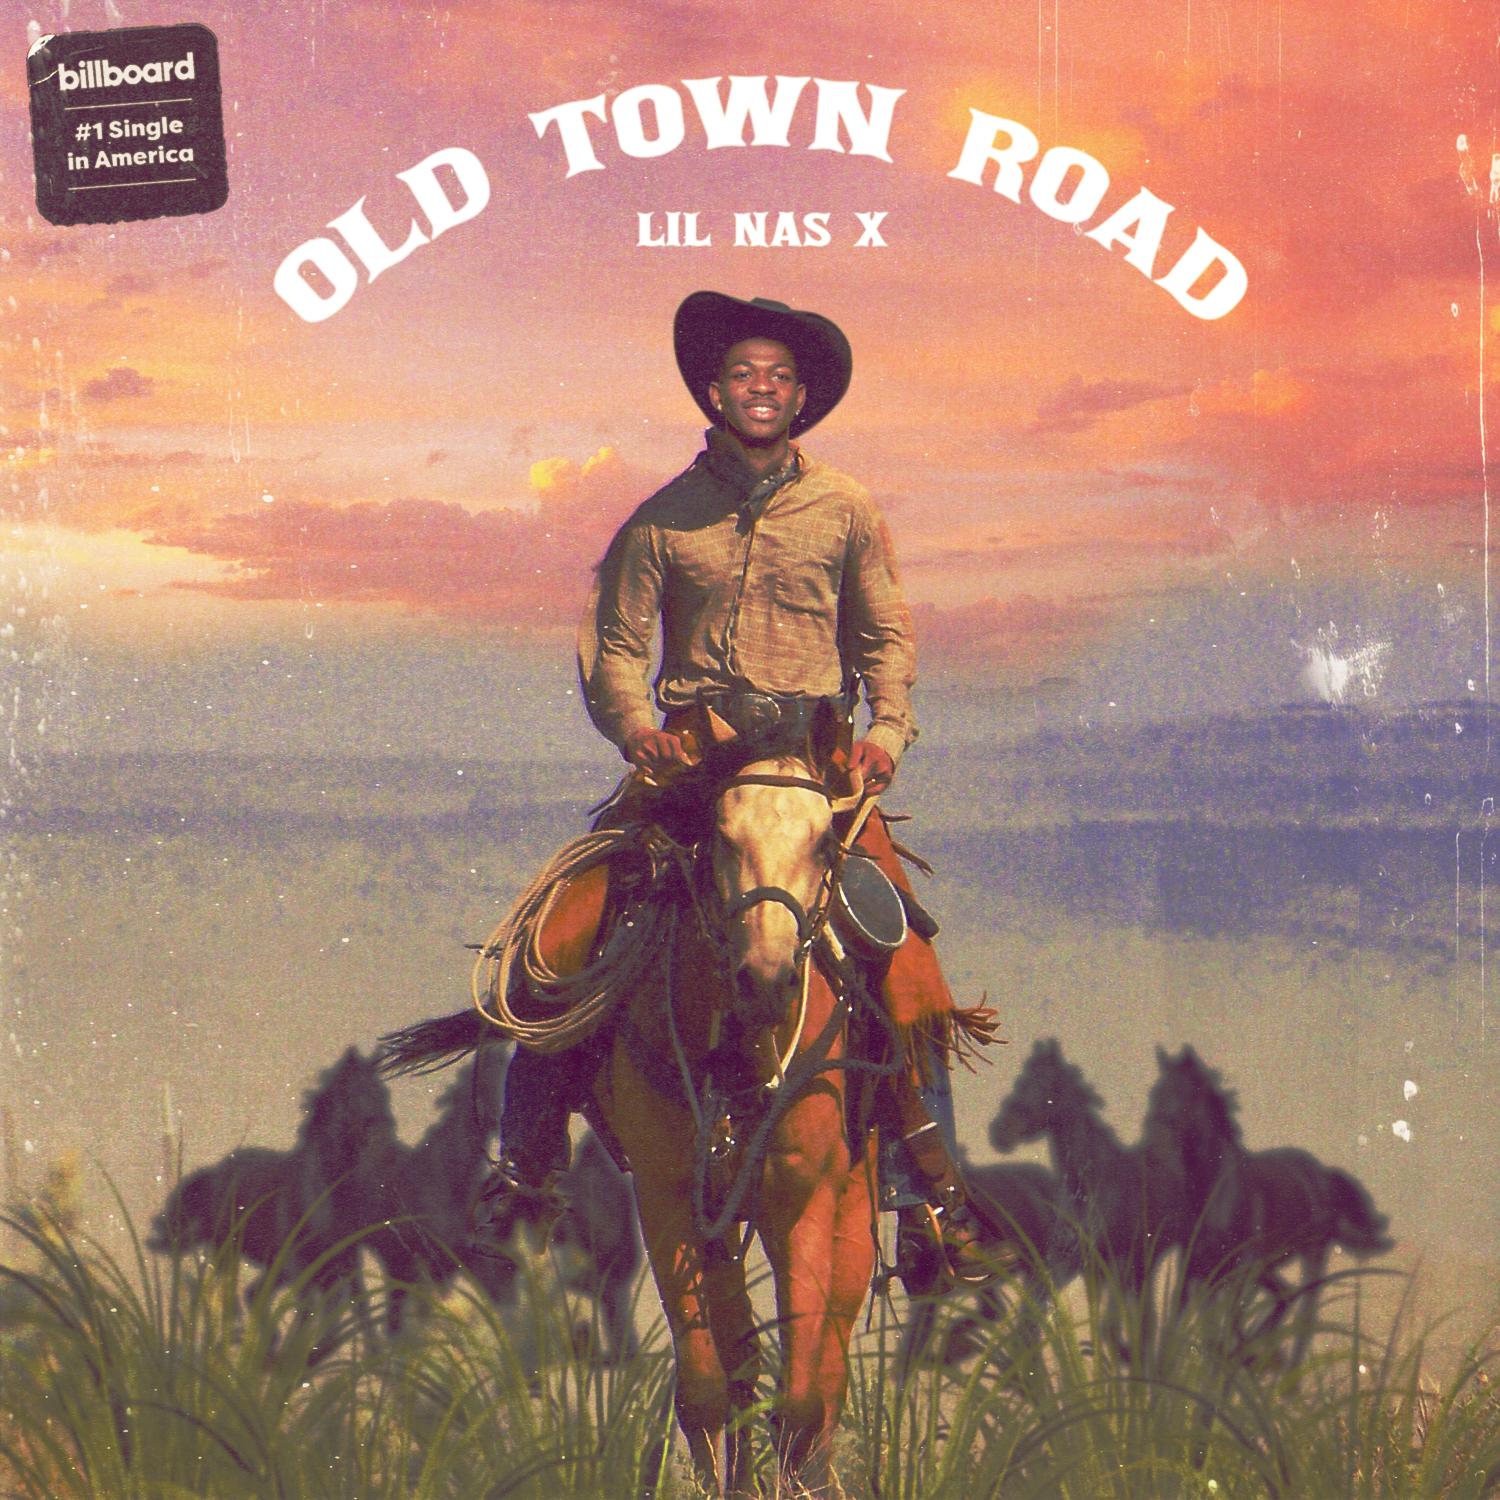 old town road young thug lyrics